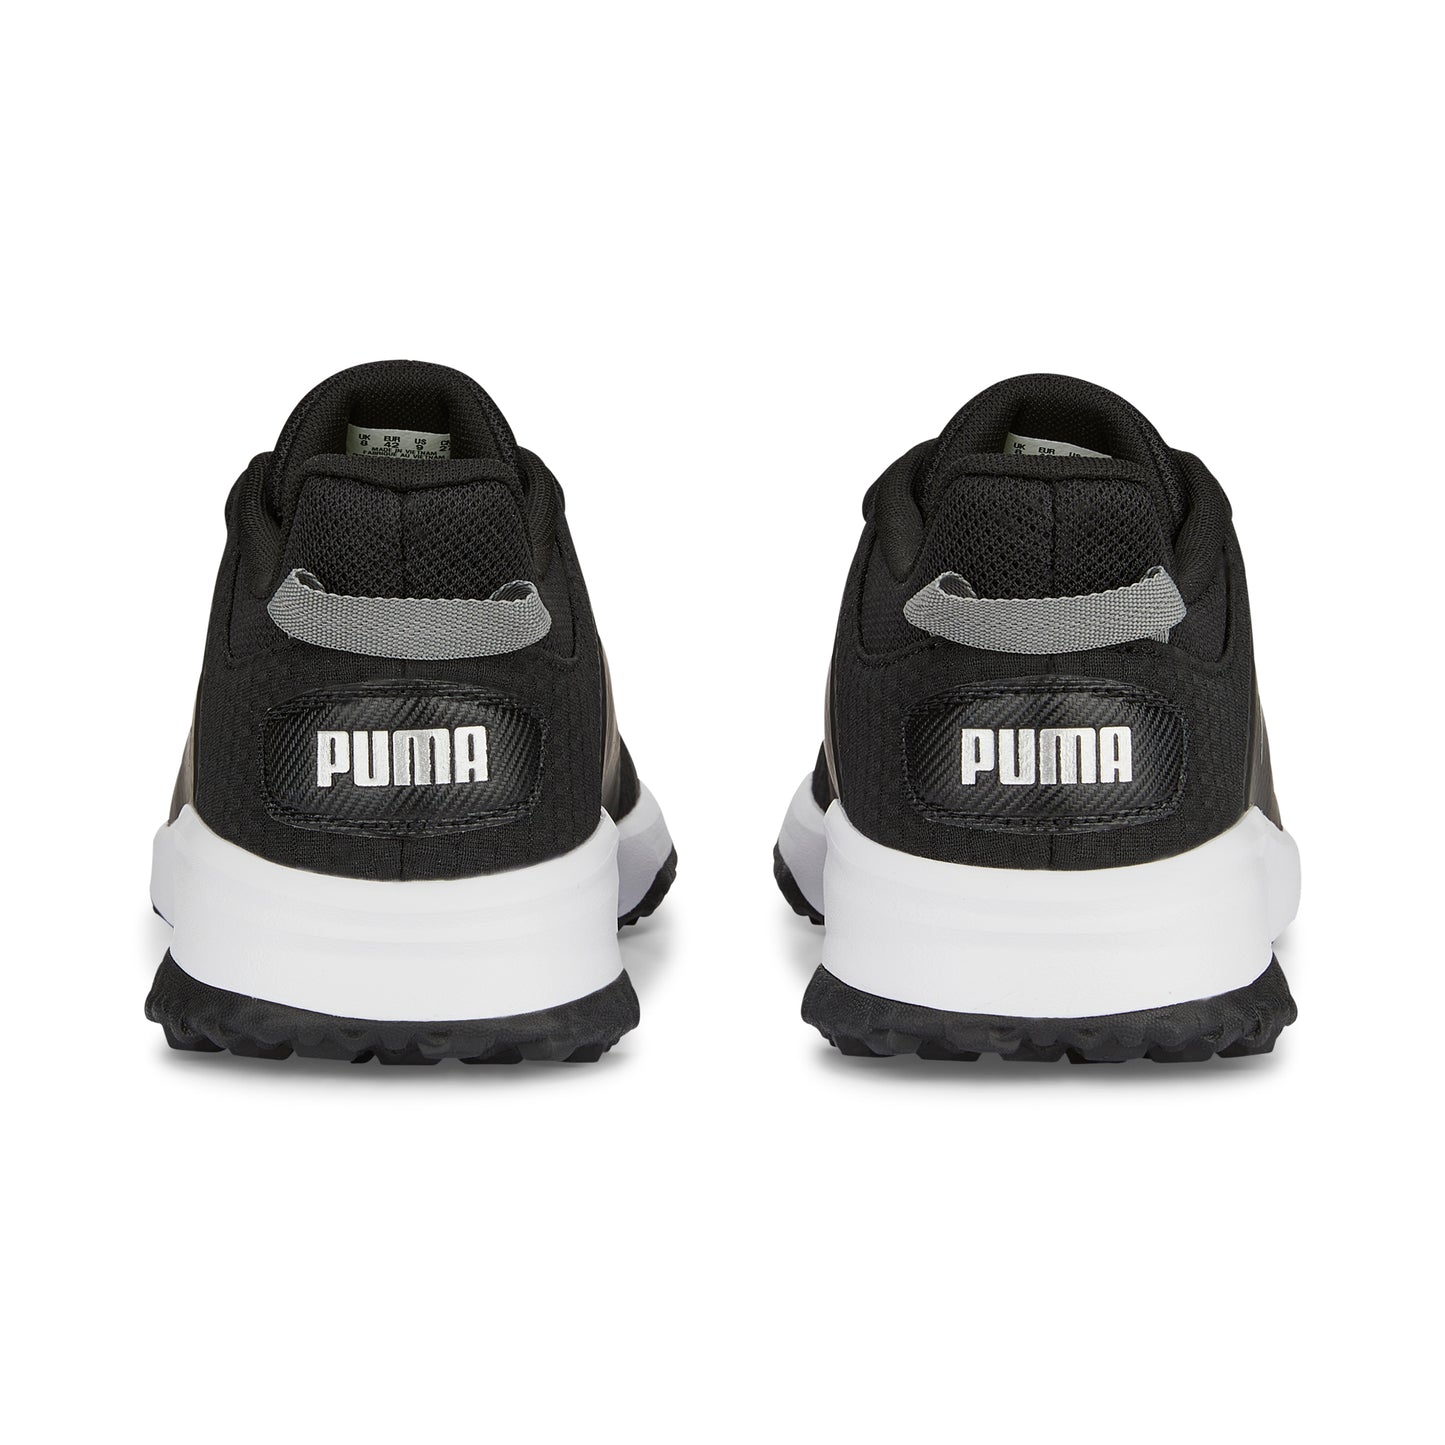 Puma Black / Puma Silver / Quiet Shade